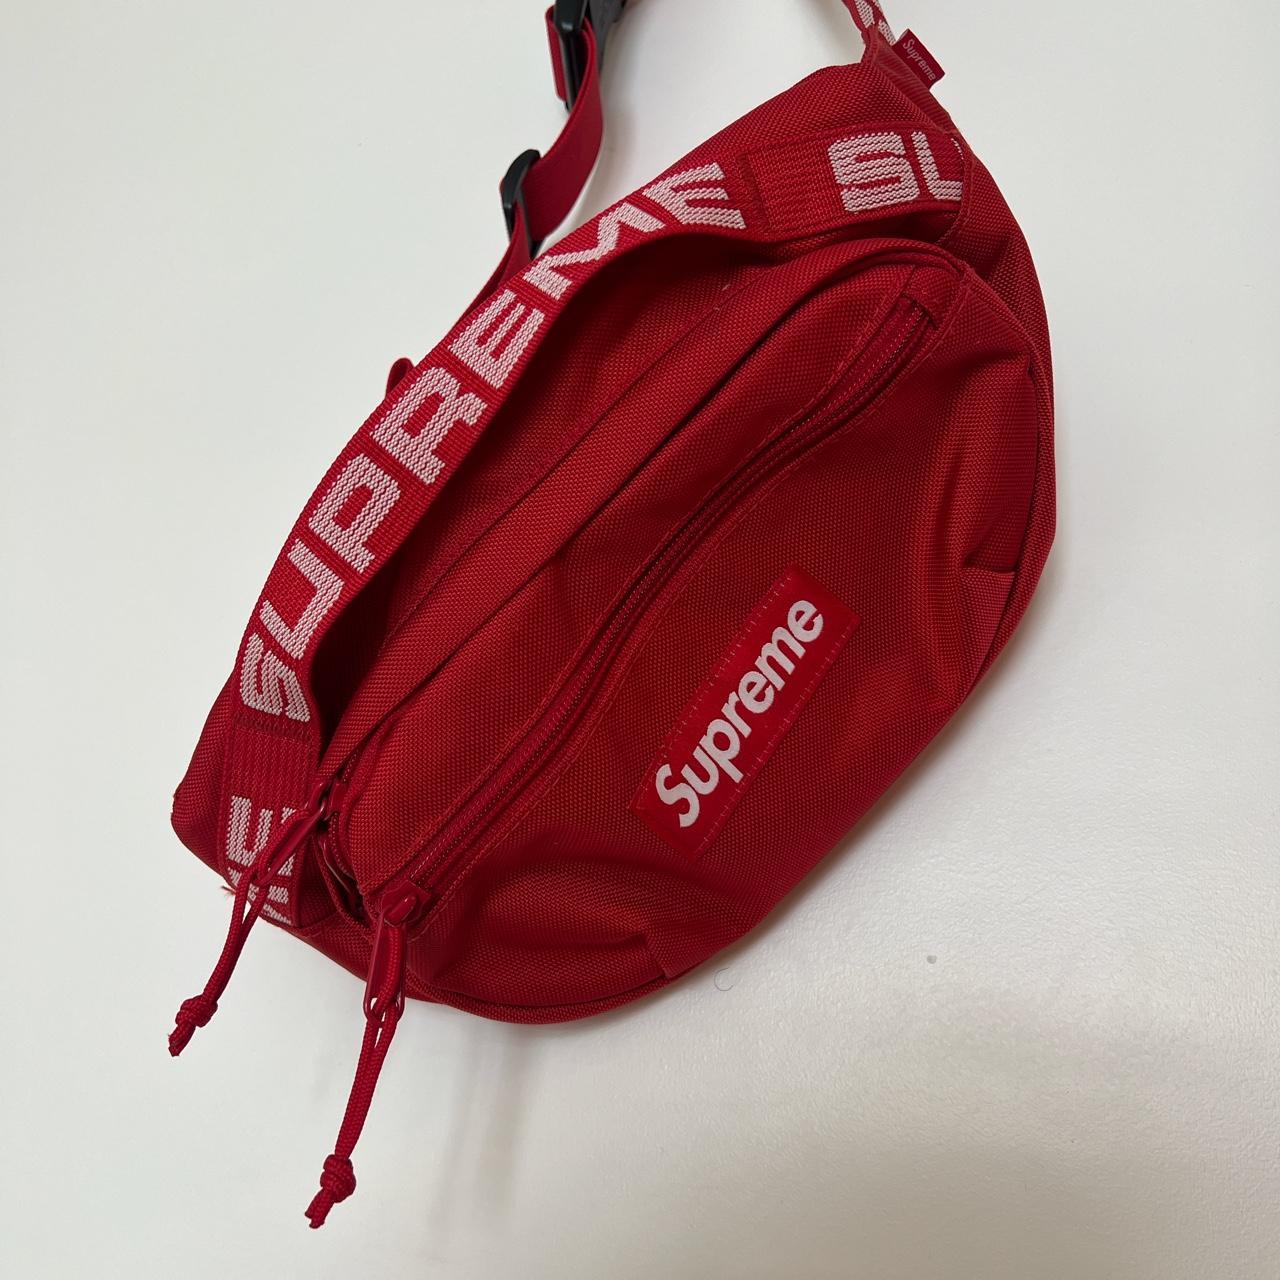 Supreme ss18 shoulder bag, been used but in very - Depop